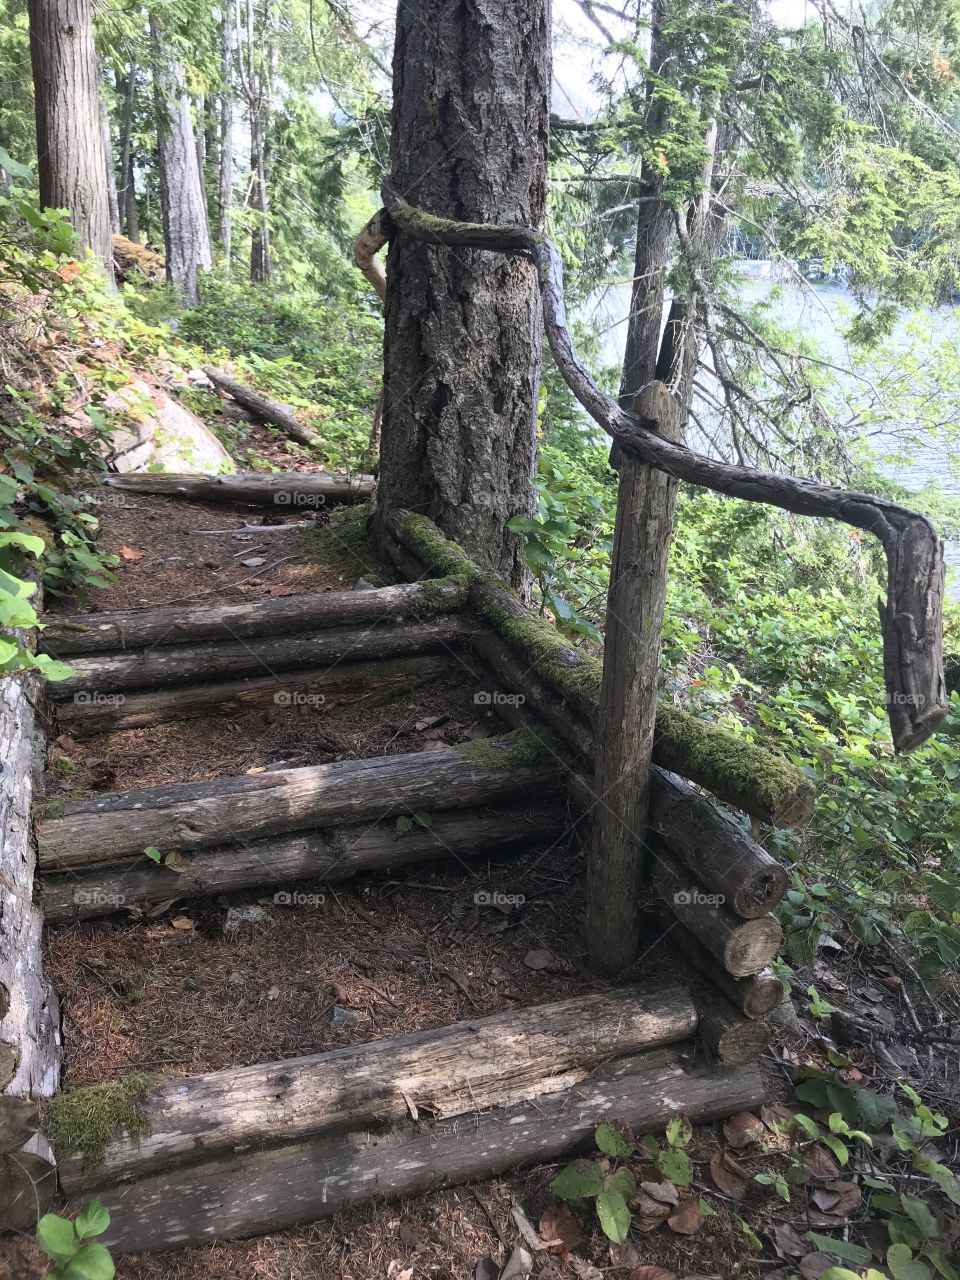 Rustic handmade steps along a trail